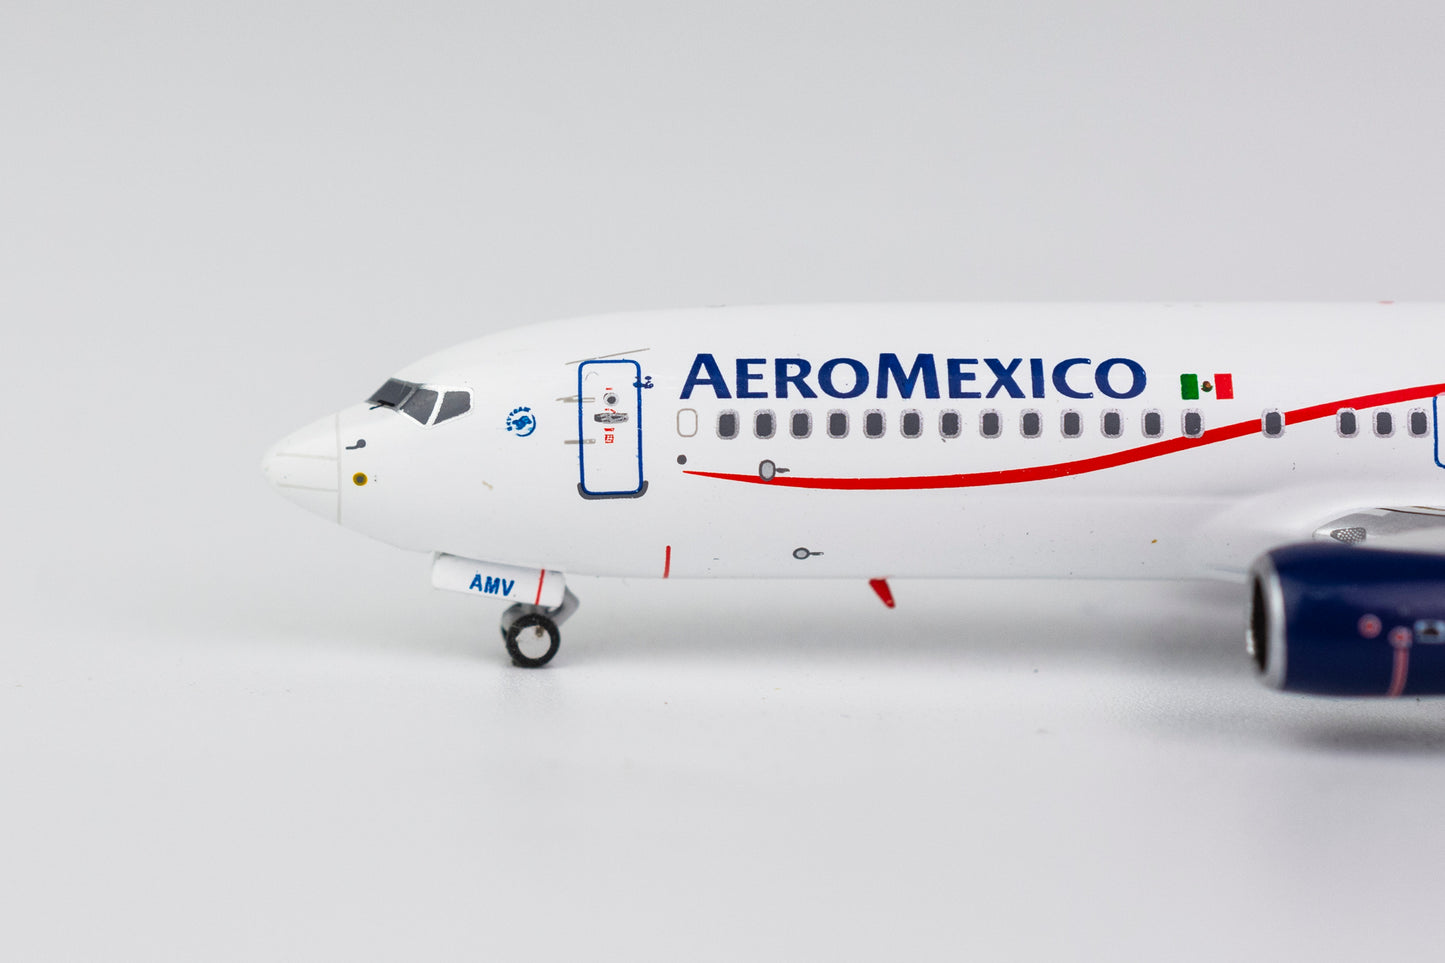 1:400 NG Models Aeroméxico Boeing 737-800 "Split Scimitars" XA-AMA NG58090